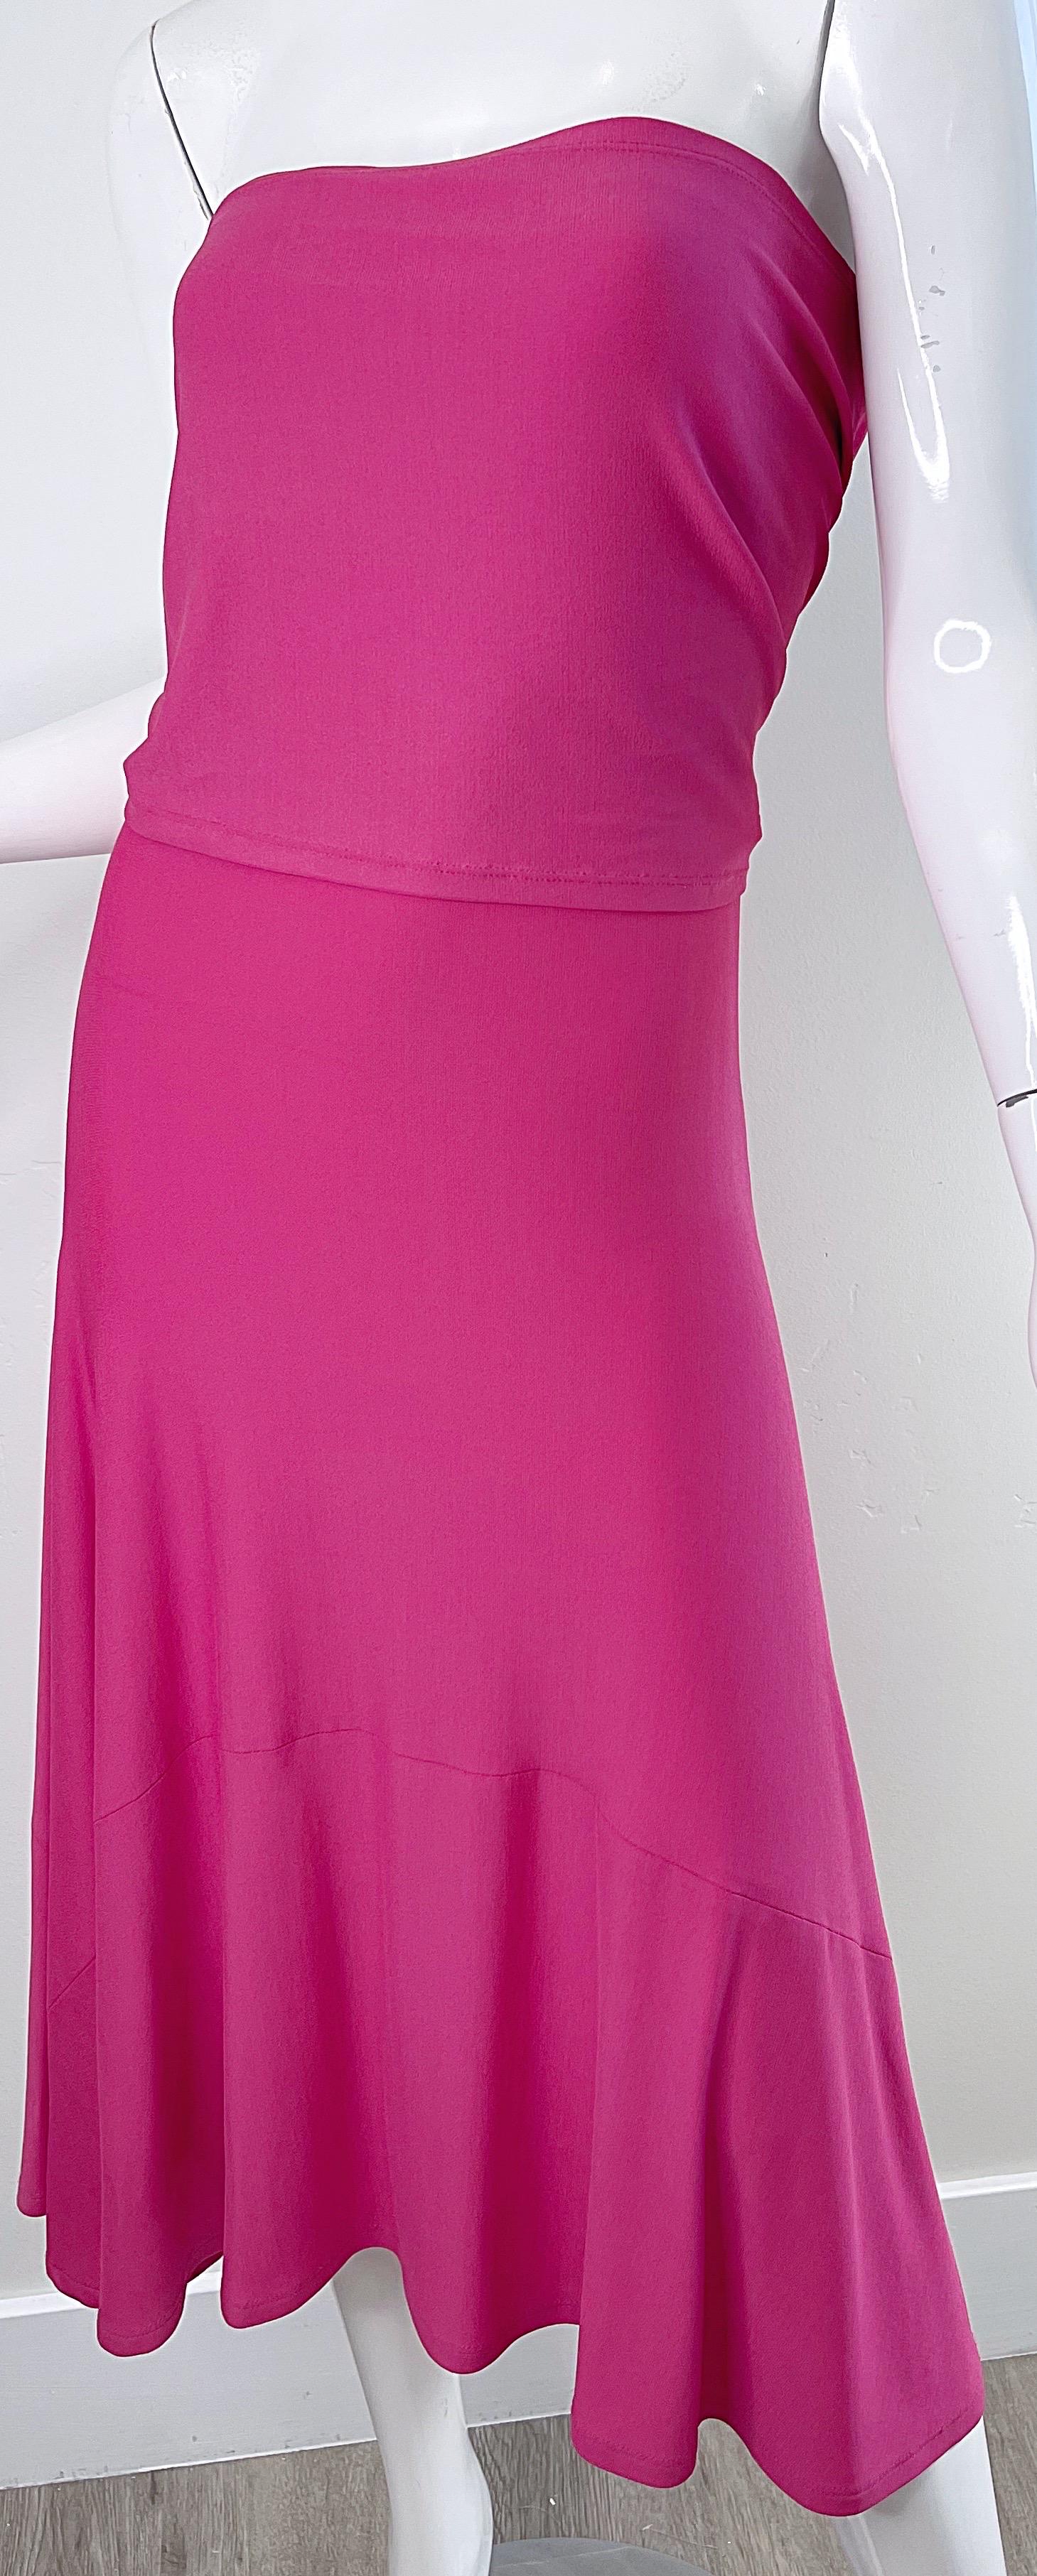 NWT Donna Karan Resort 2016 Hot Pink Size Medium Strapless Tube Dress For Sale 7